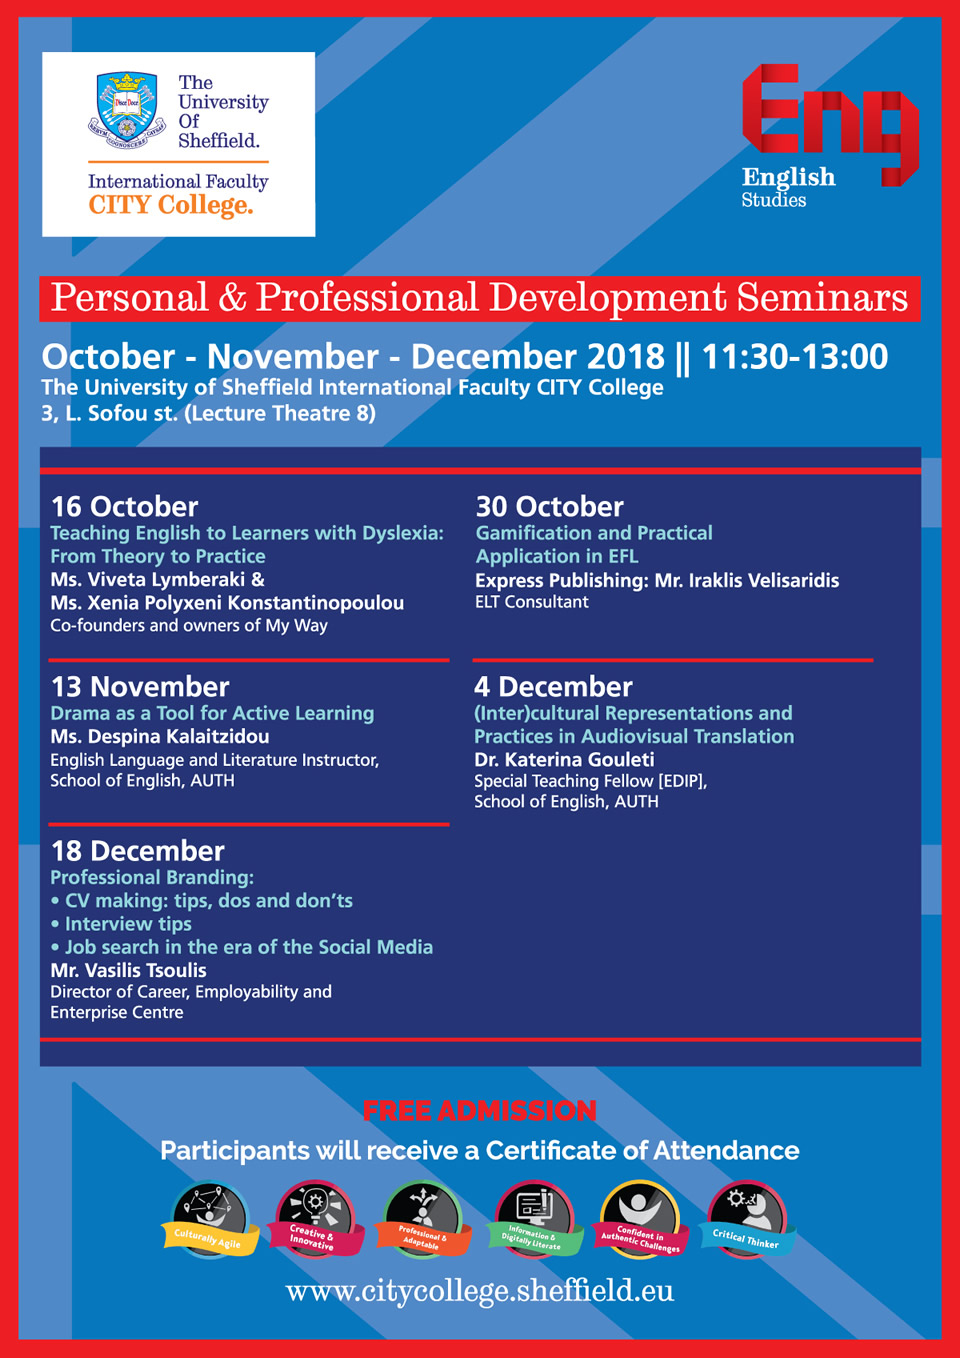 Personal & Professional Development Seminars 2018 by the University of Sheffield International Faculty's English Studies Dept